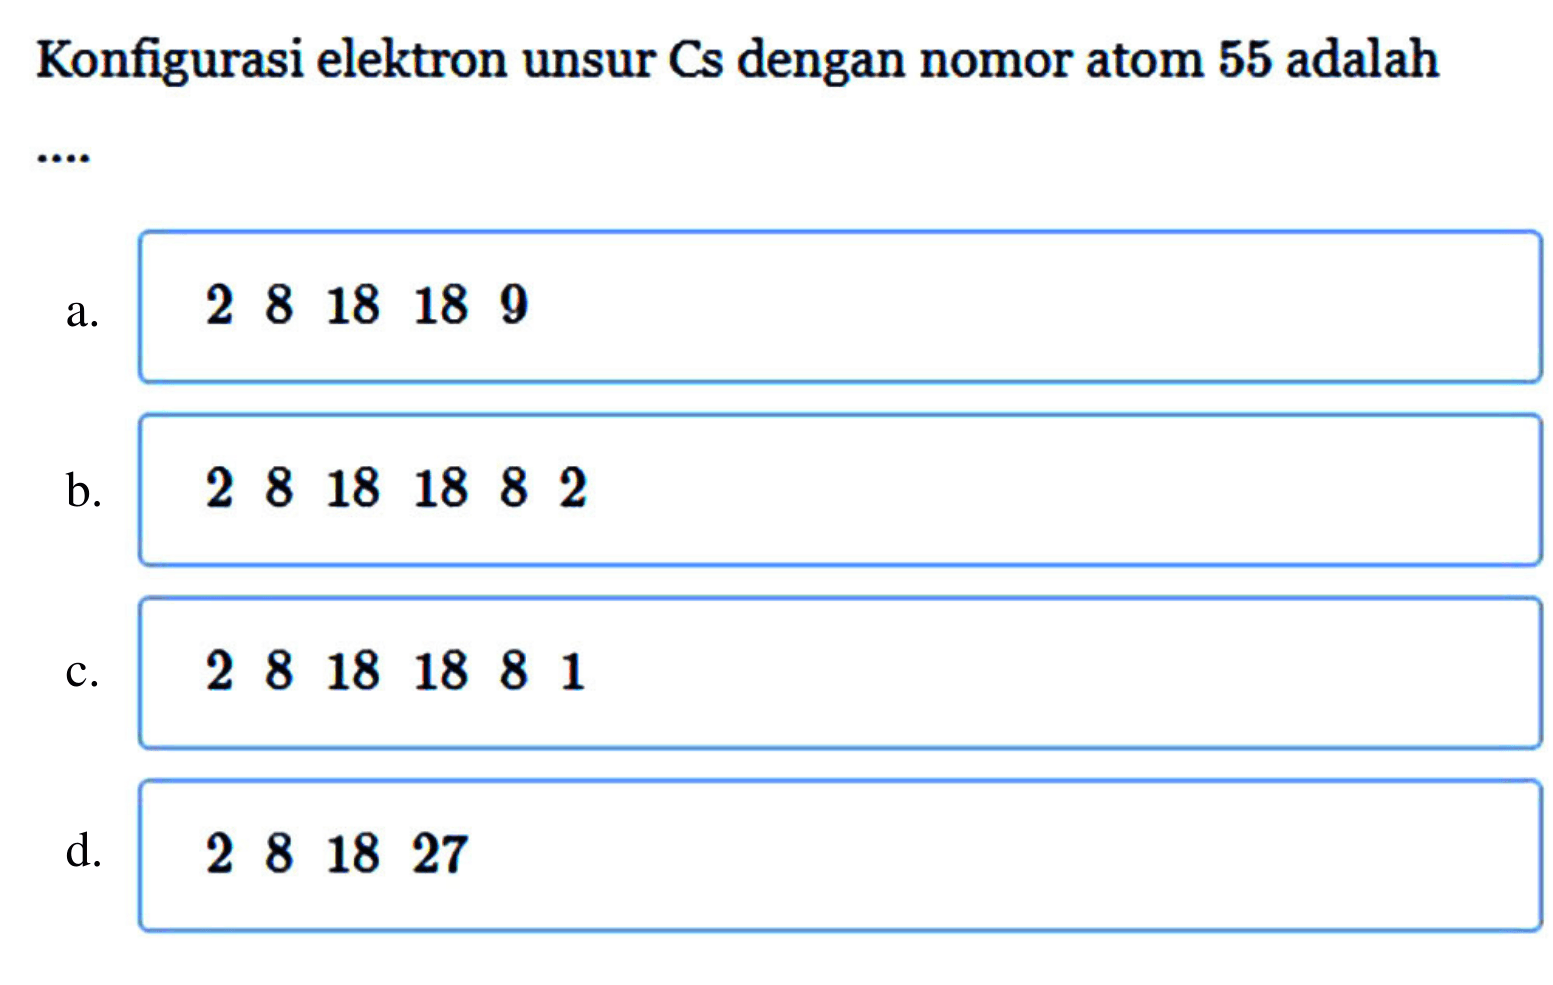 Konfigurasi elektron unsur Cs dengan nomor atom 55 adalah ...